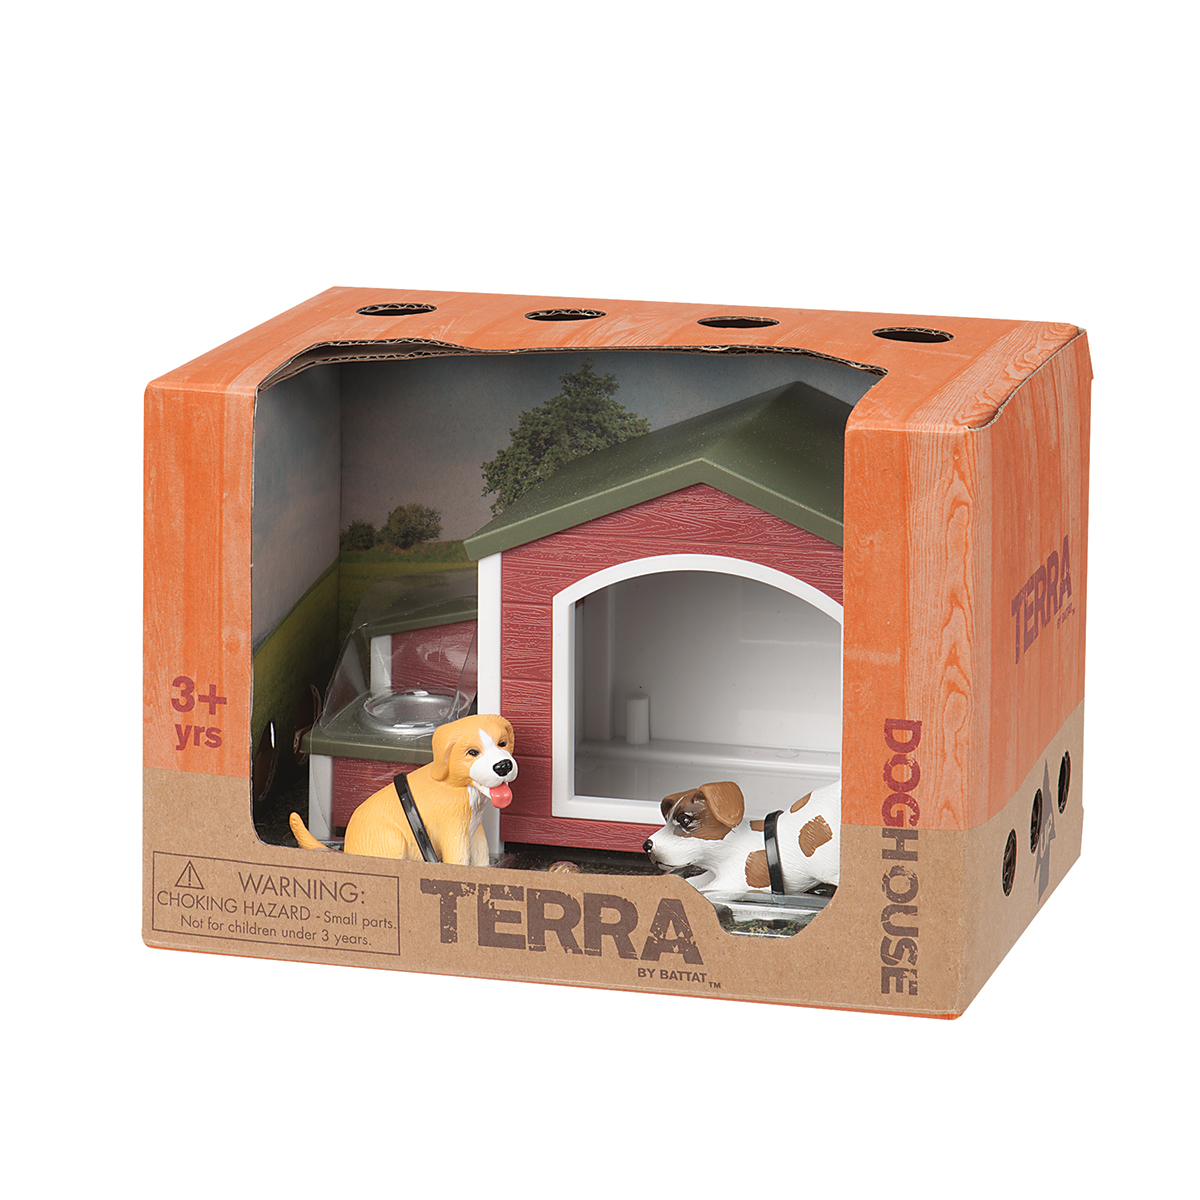 Dog House – Terra by Battat